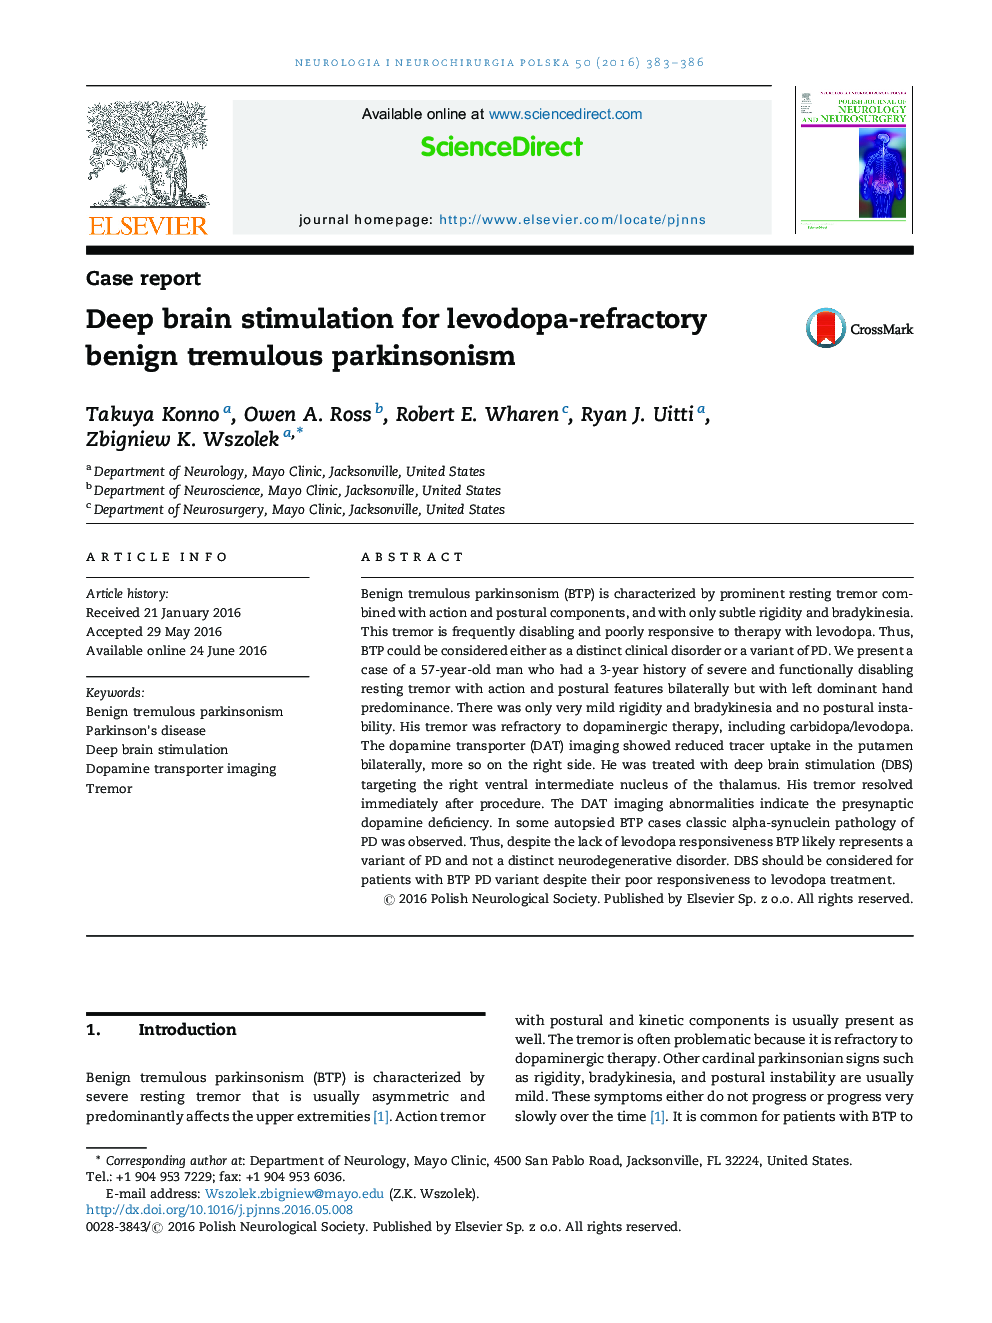 Deep brain stimulation for levodopa-refractory benign tremulous parkinsonism